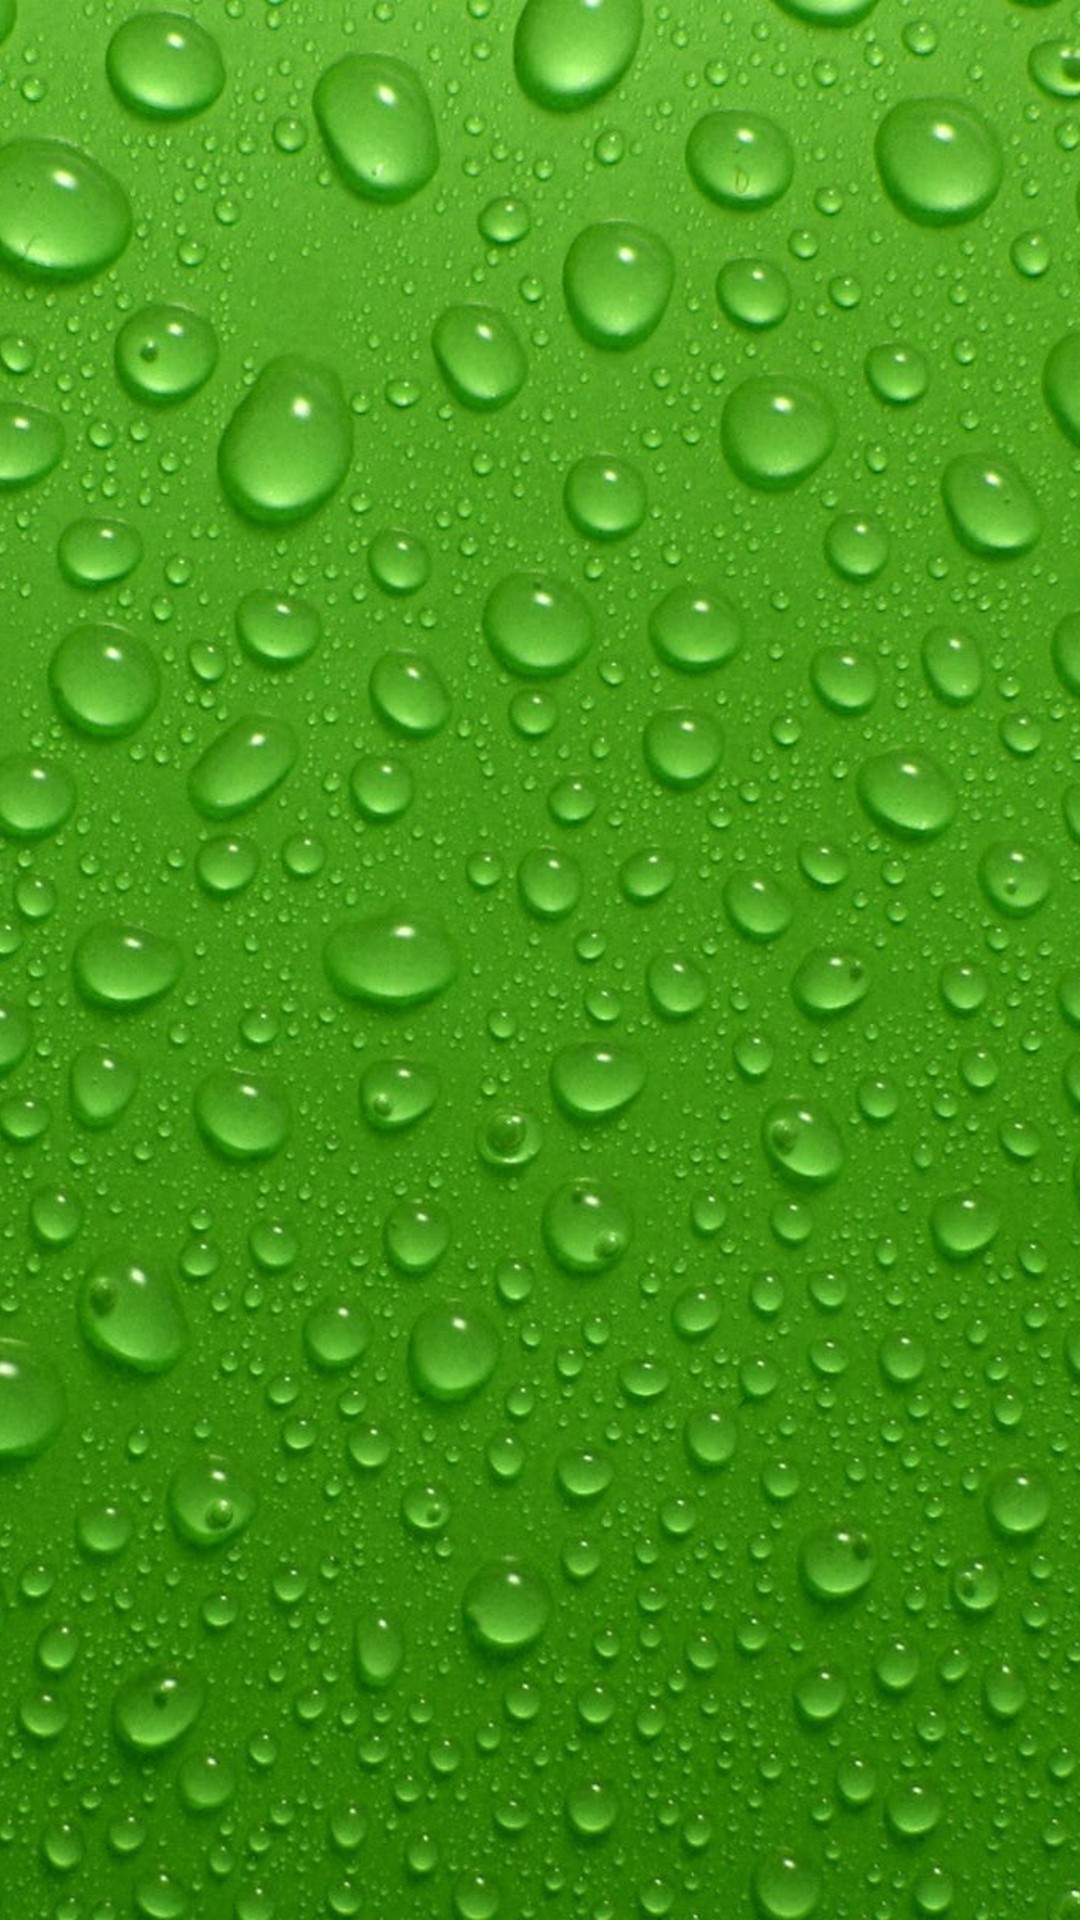 Green phone background